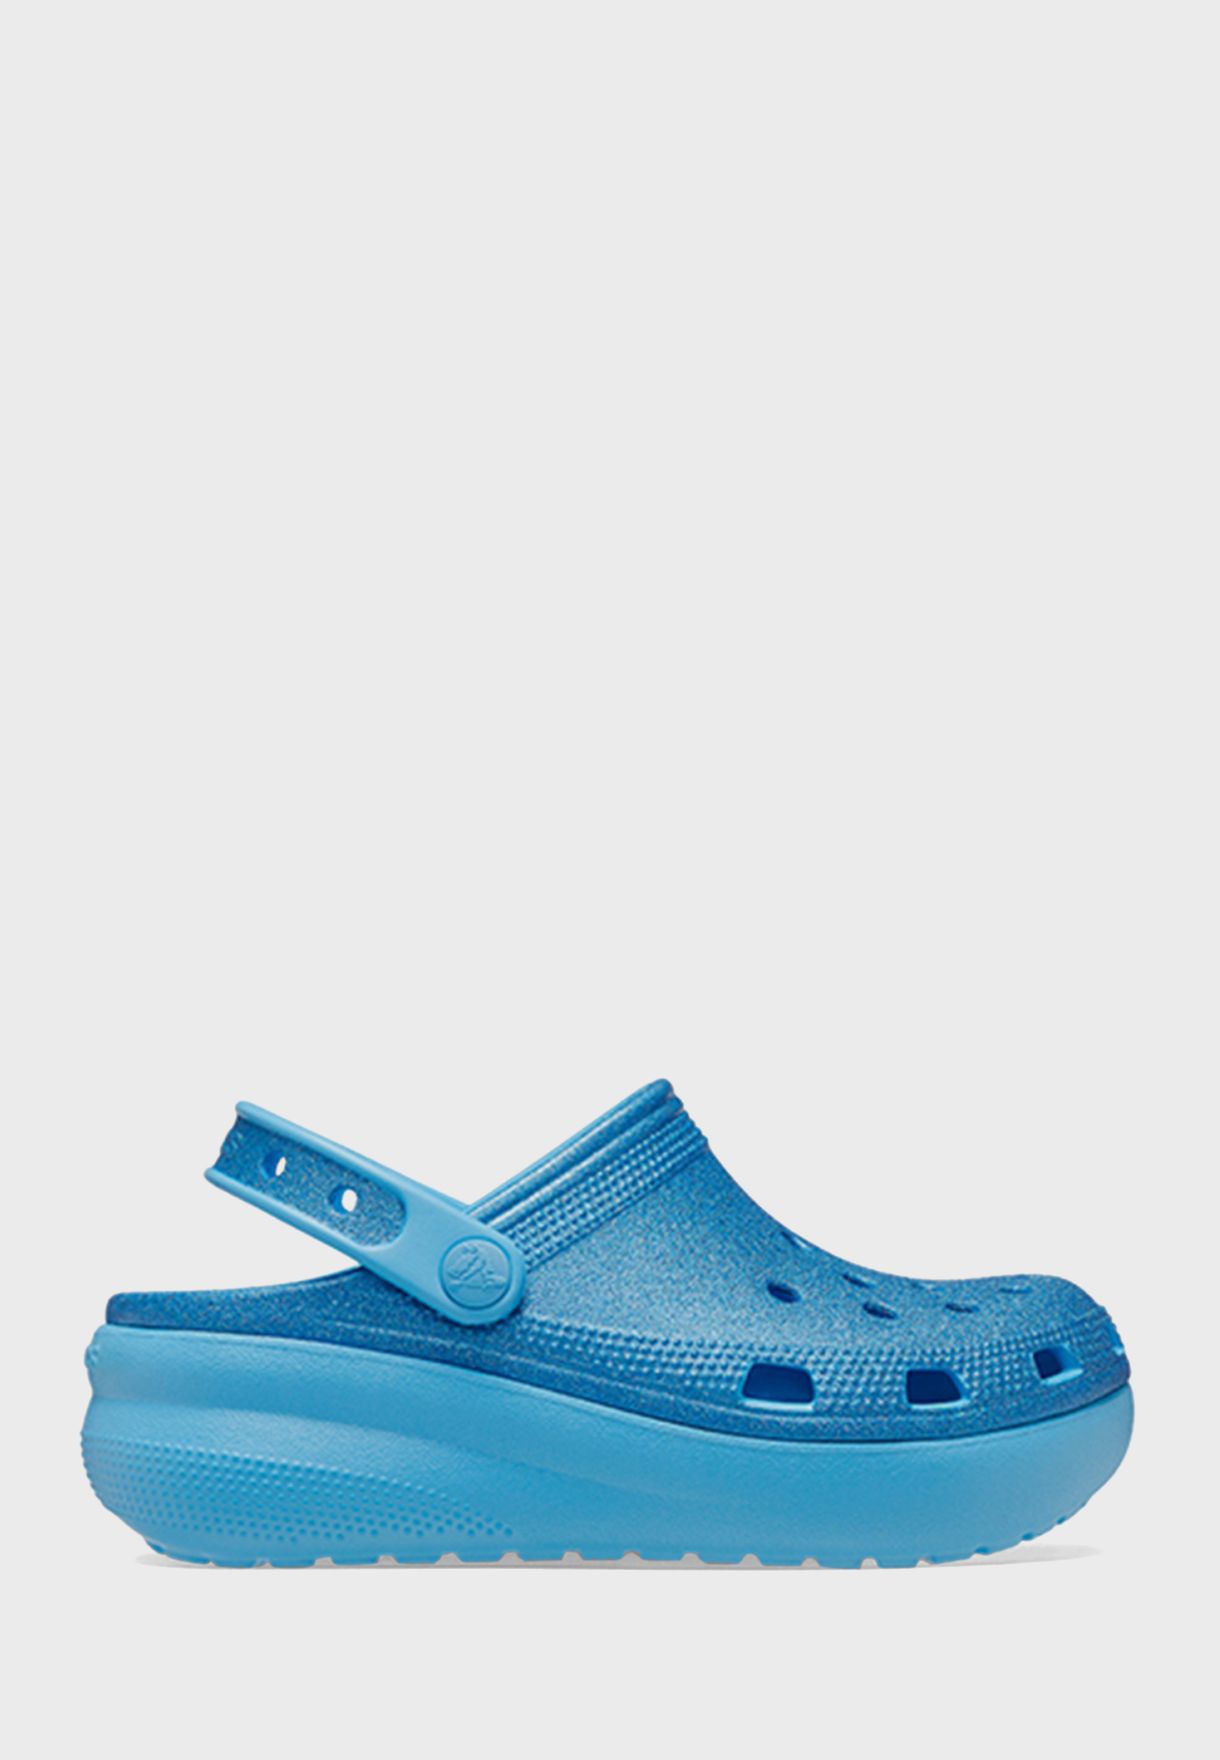 Kids Crocs Glitter Cutie Clog Sandals